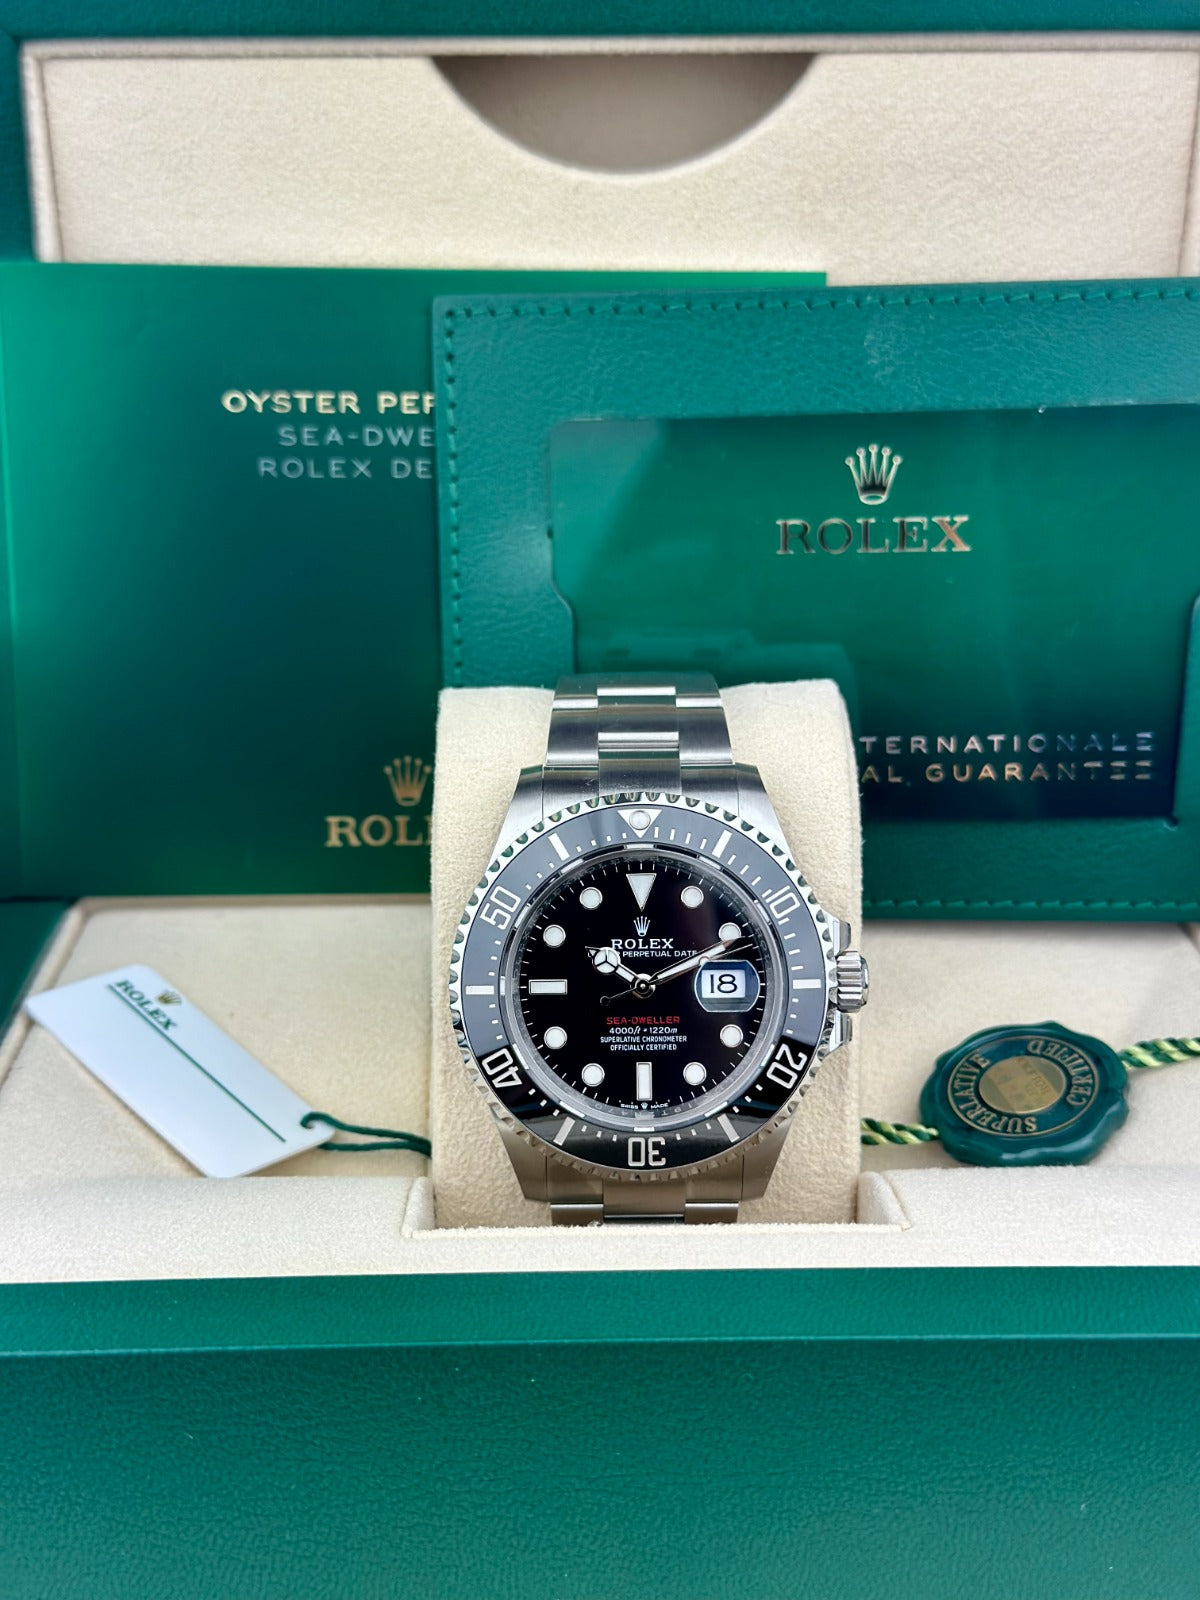 Rolex Sea-Dweller Red Sea, Oyster bracelet, 43mm, Oystersteel, Black Dial, Cerachrom bezel insert in Black ceramic, 126600